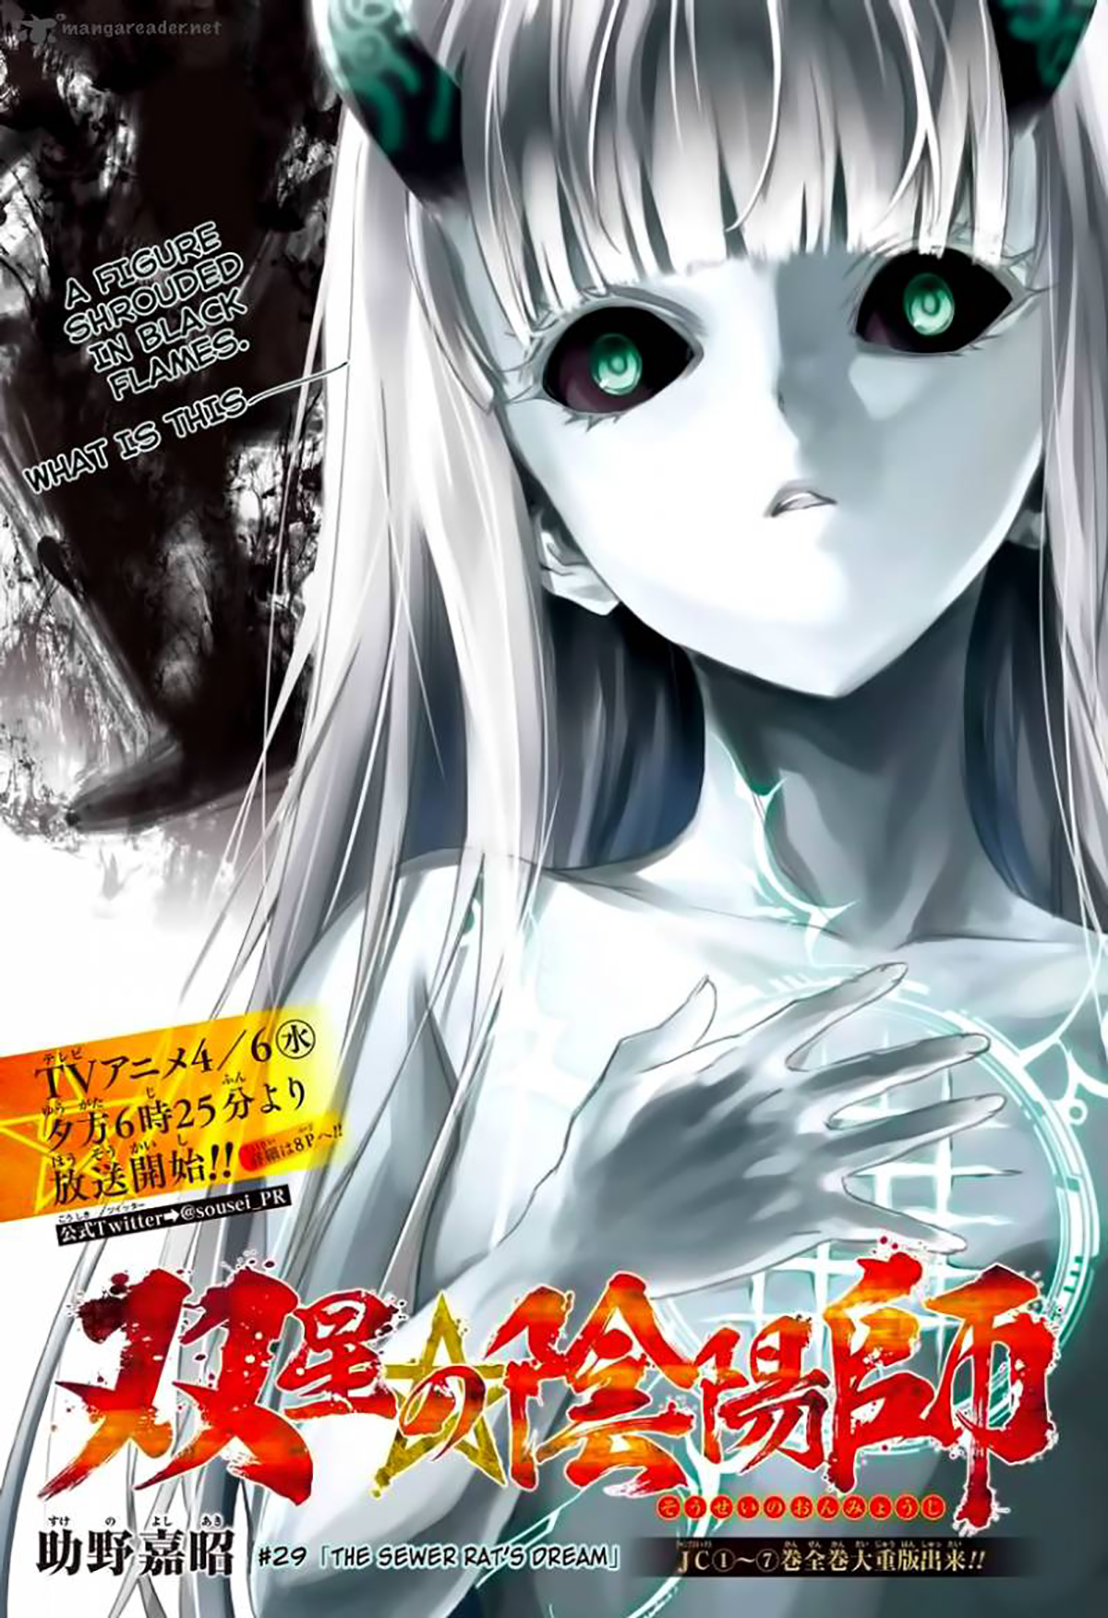 AnimaBoo Anime Manga Blog: Sousei no Onmyouji / Twin Star Exorcist